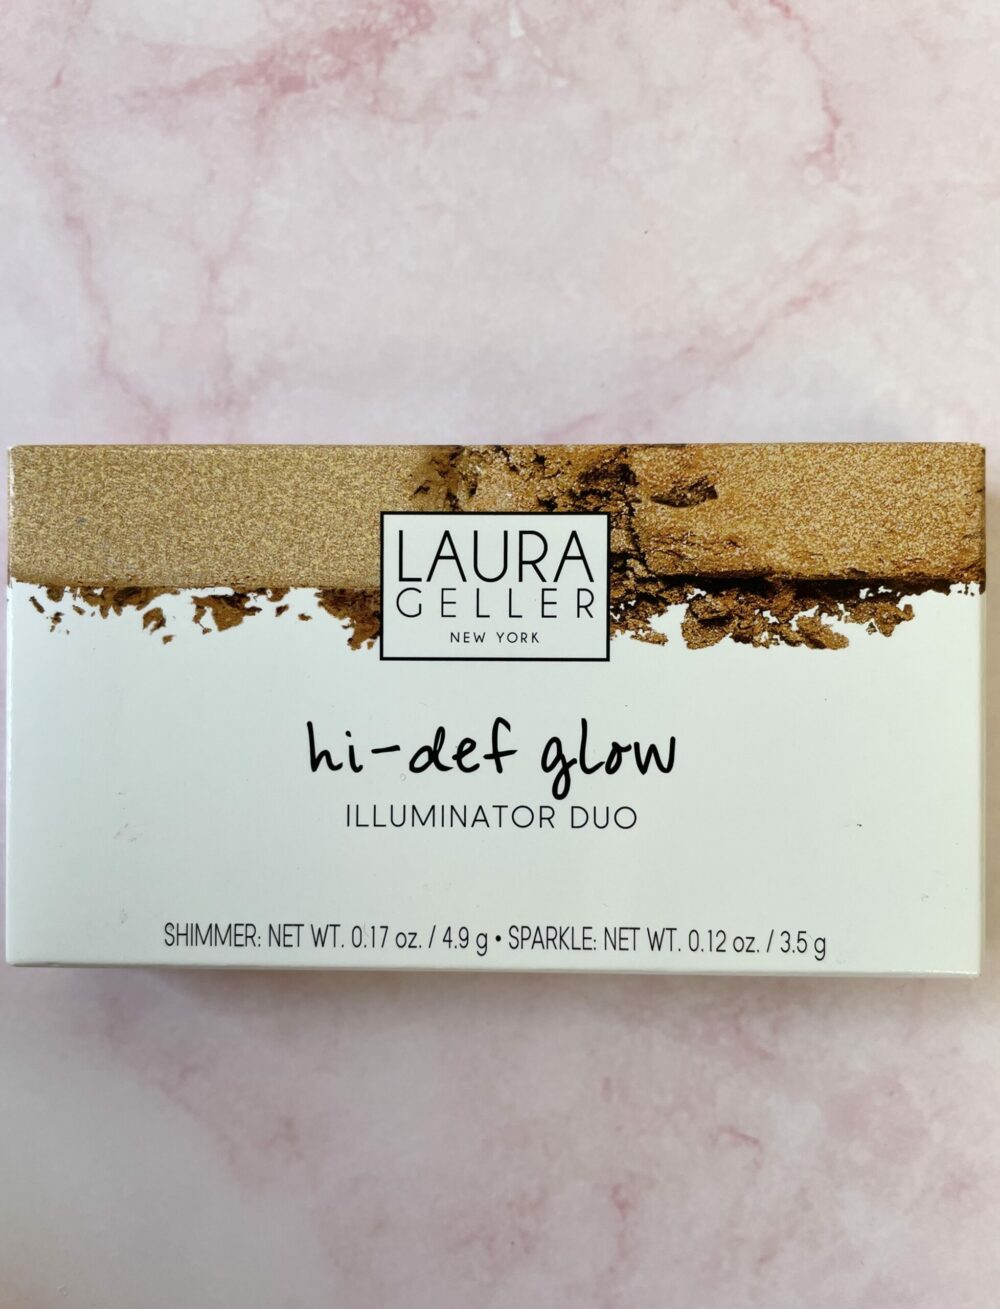 Strawberry Week | Period Self Care Subscription | Laura Geller Hi-Def Glow Illuminator Duo | Heart of Gold 8.4g